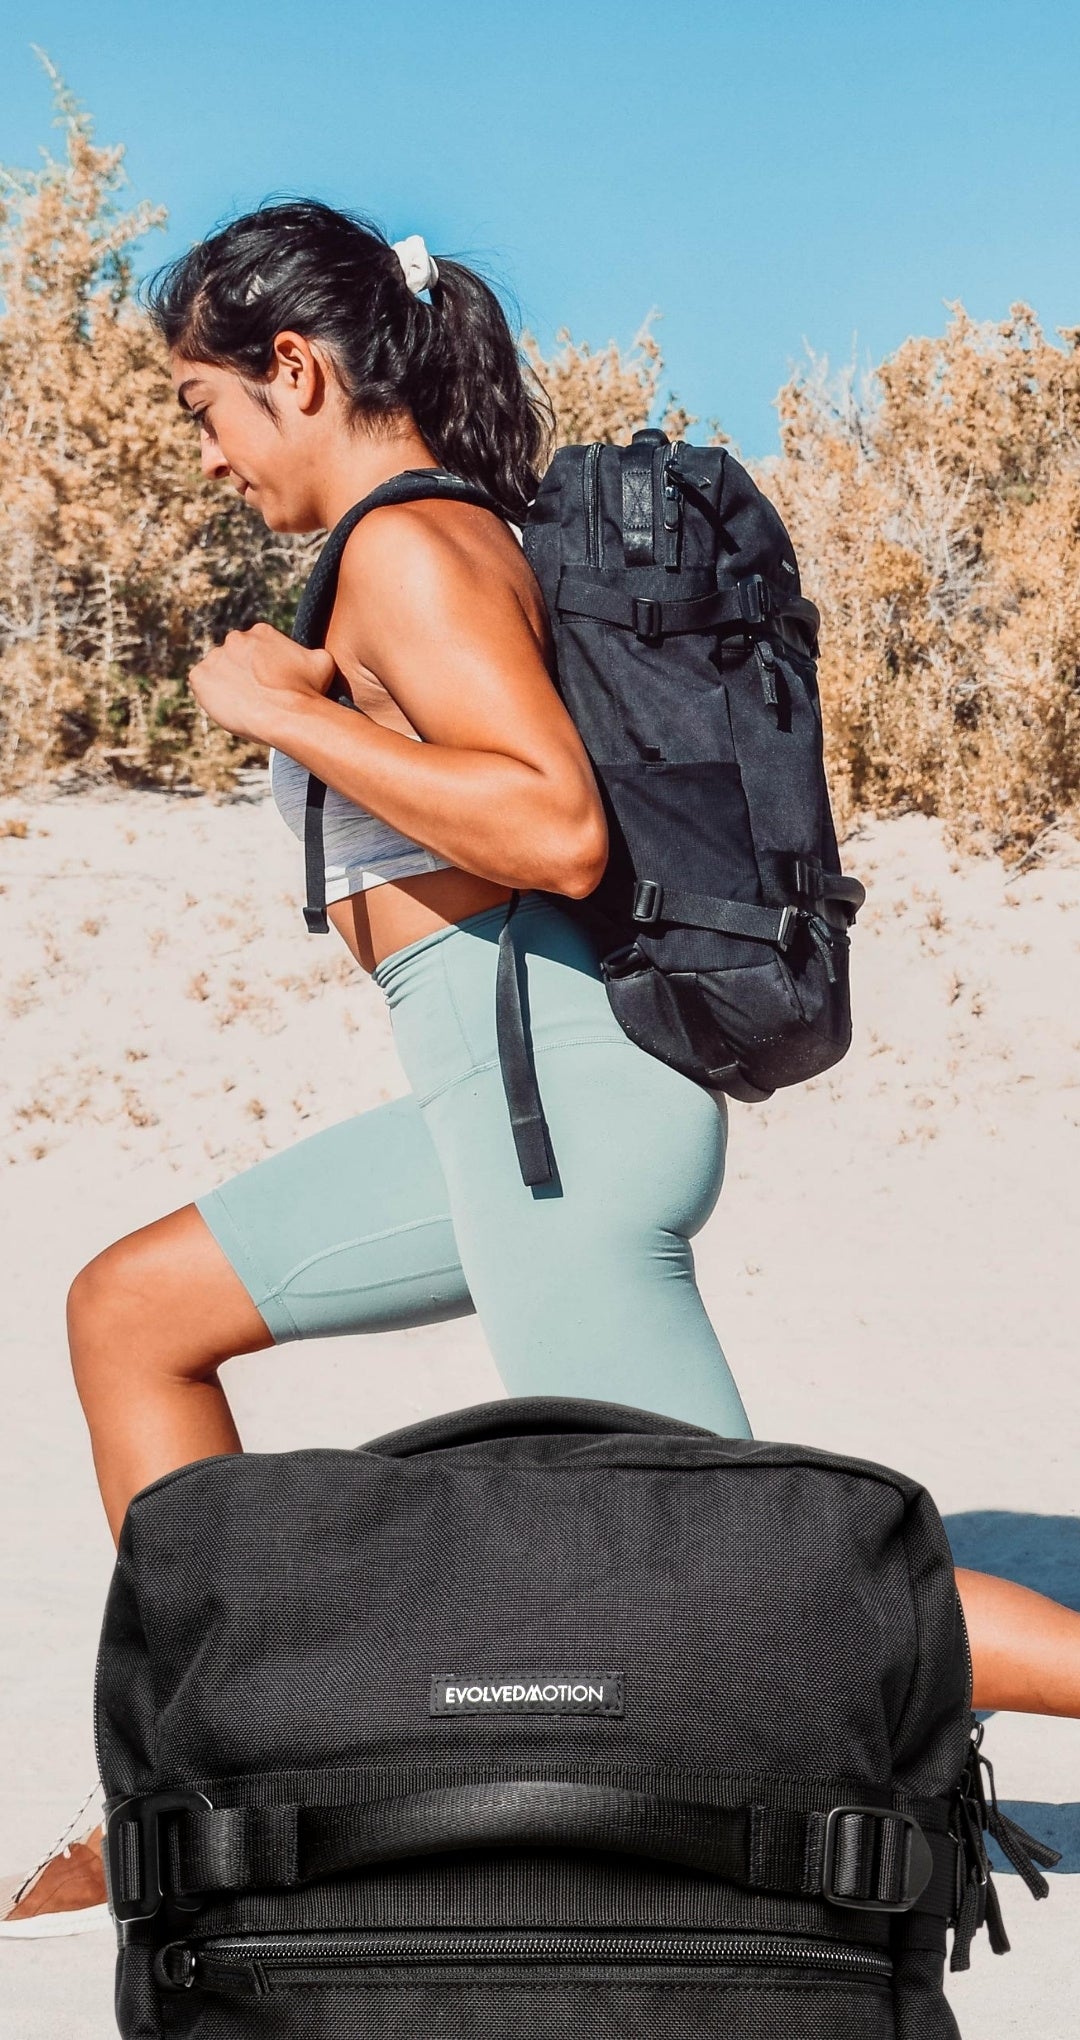 evolved-motion-empack-backpack